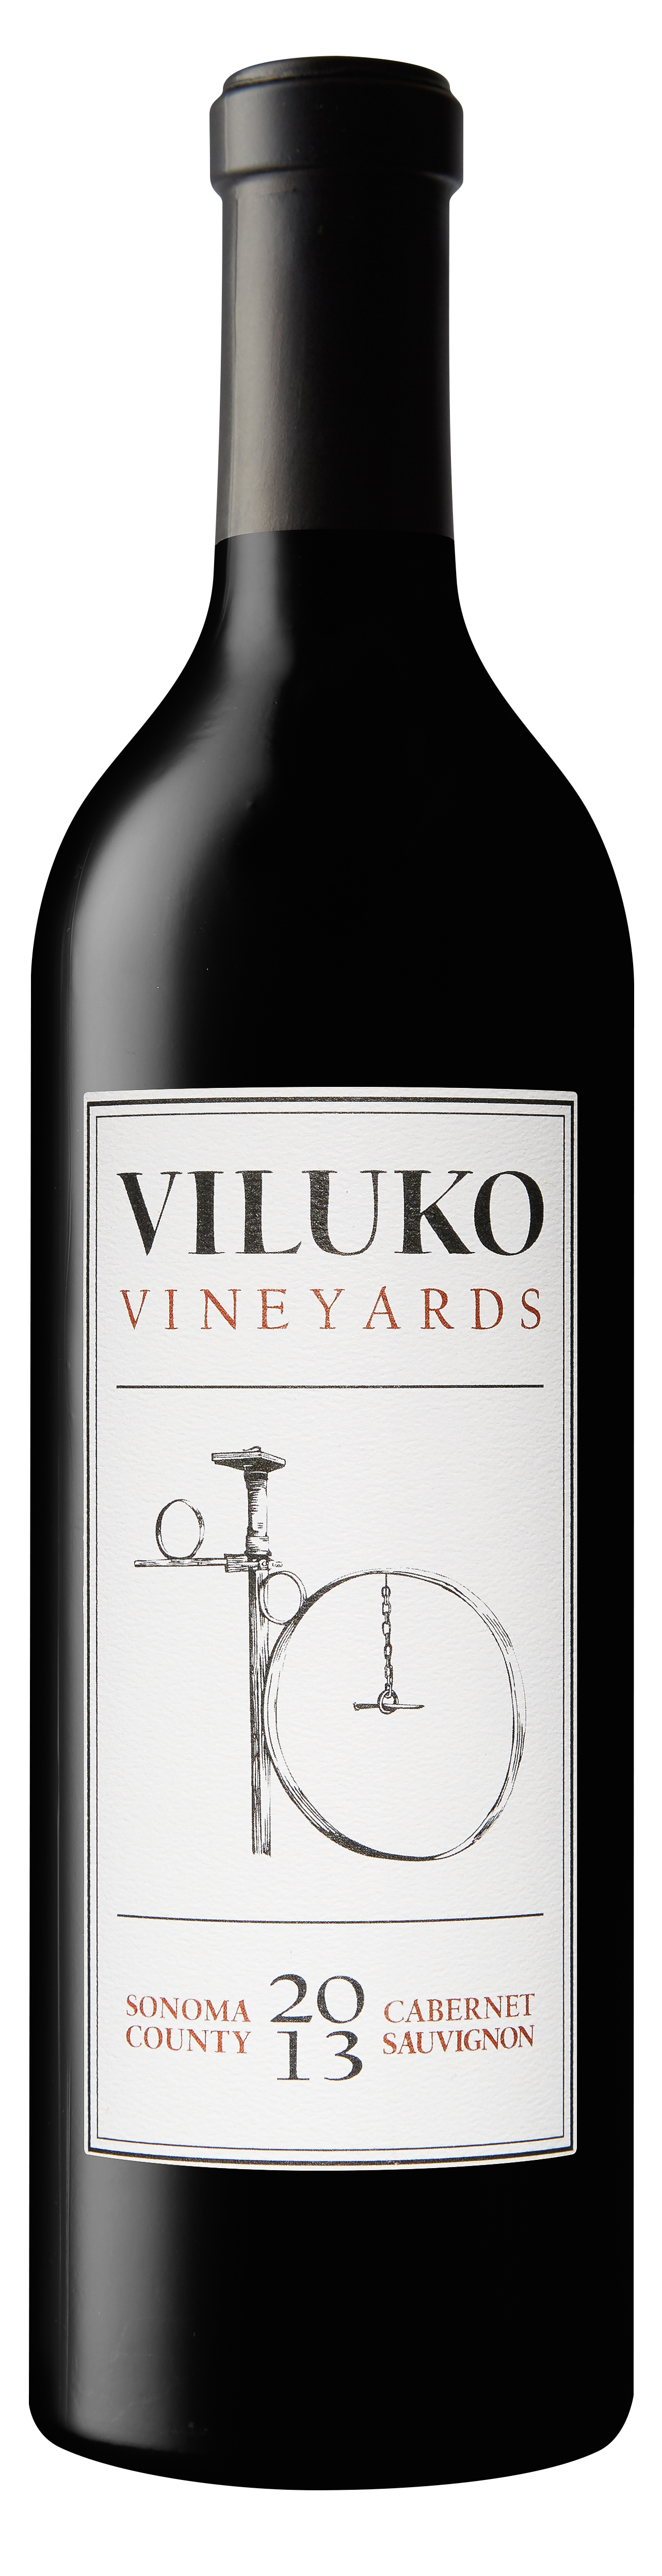 Product Image for 2013 Viluko Vineyards Cabernet Sauvignon